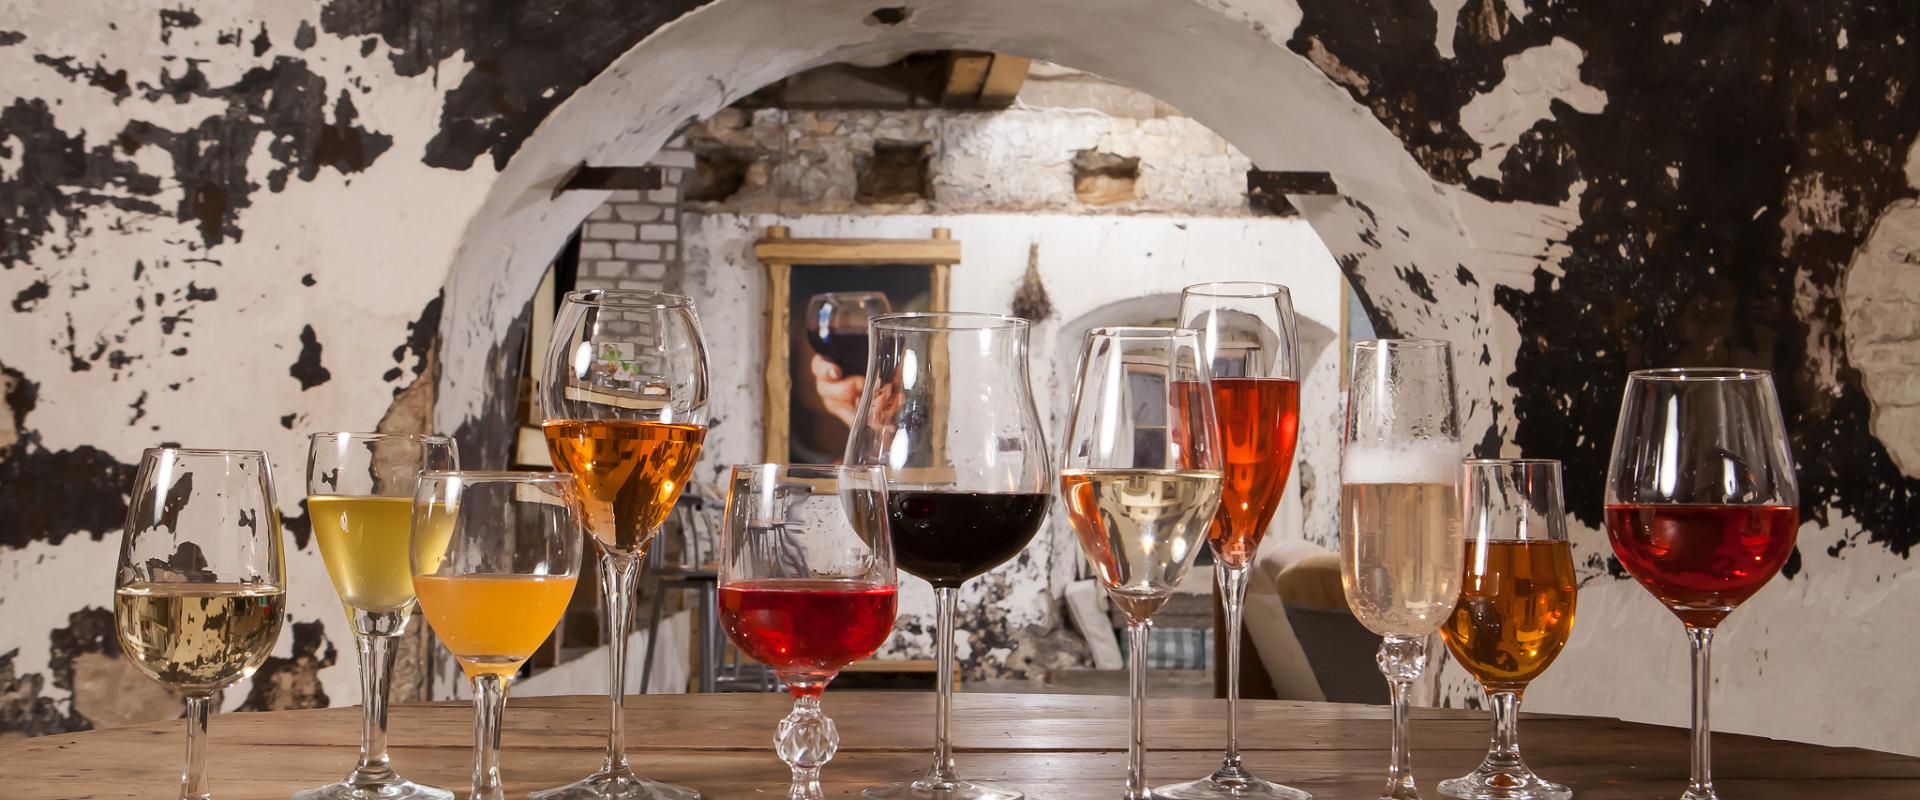 Estonian Wine Route Tour, wine glasses in Habaja Distillery